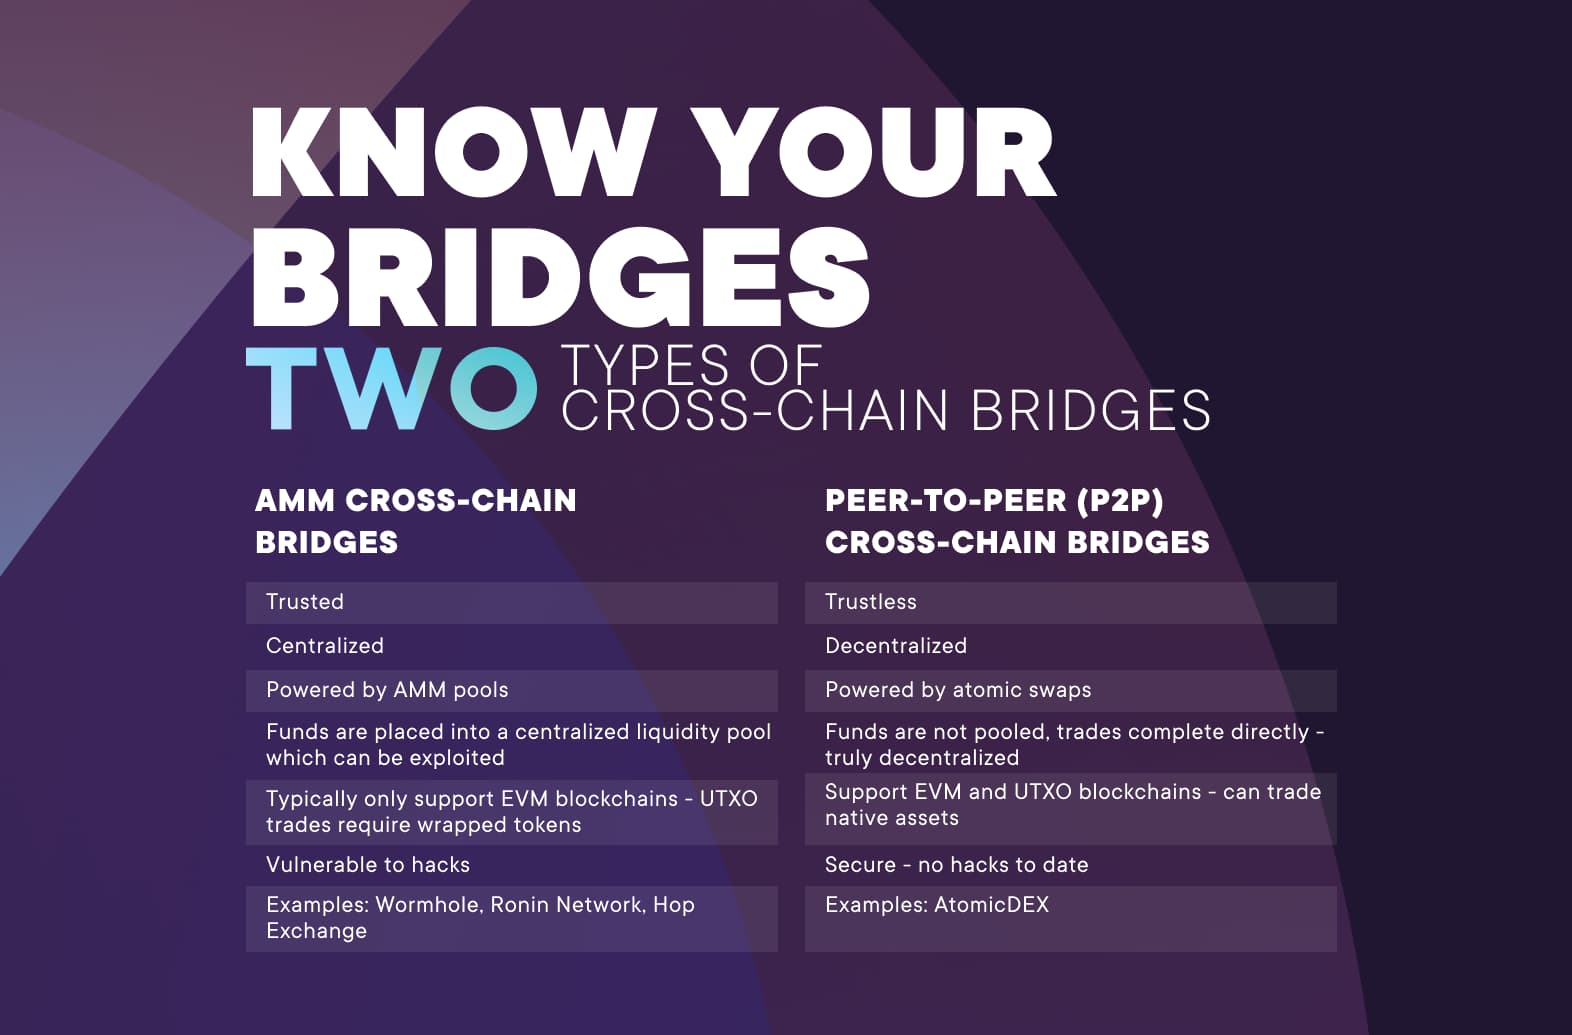 Two Types of Cross-Chain Bridges